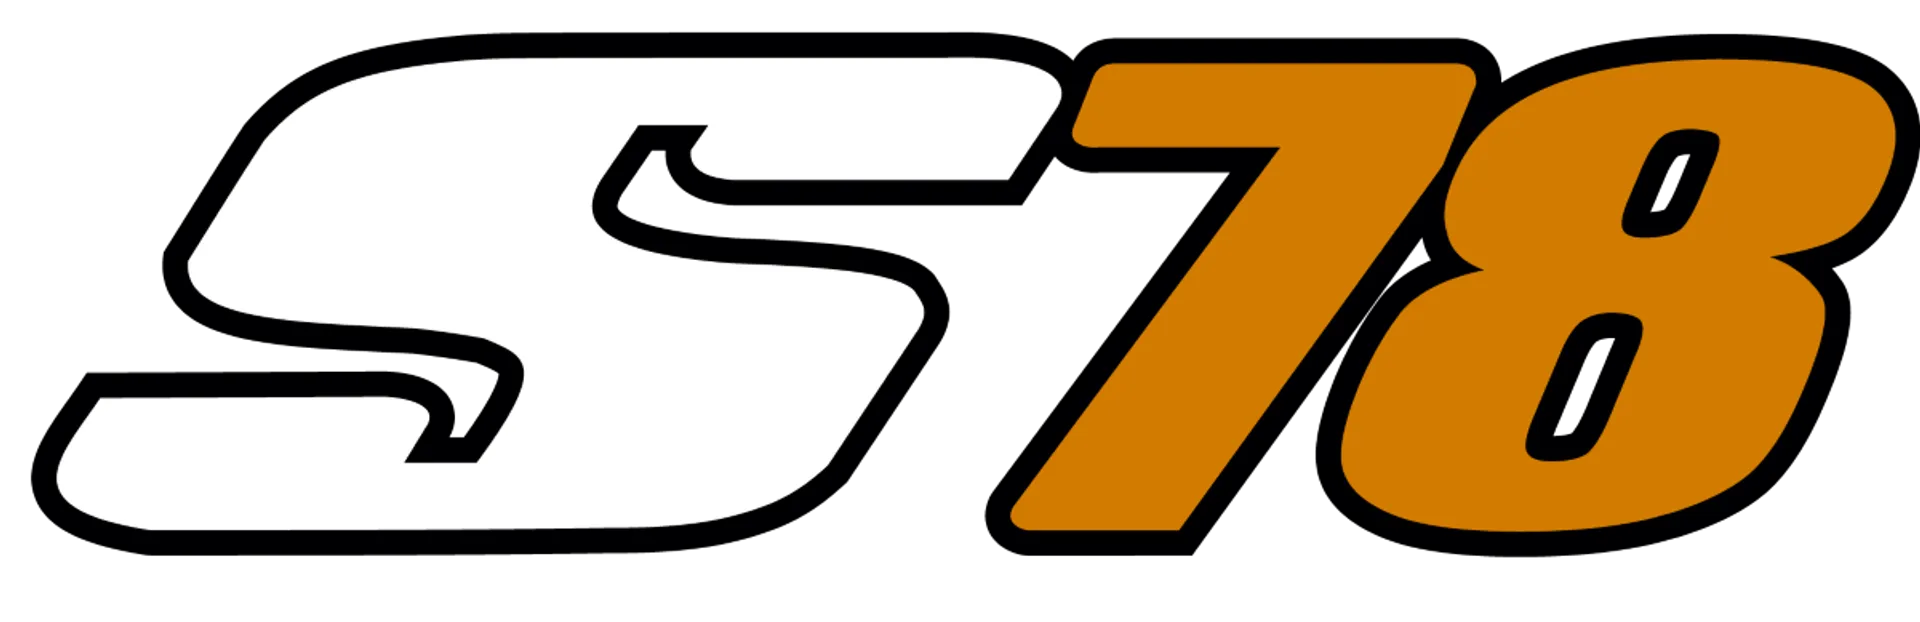 SPORT 78 logo